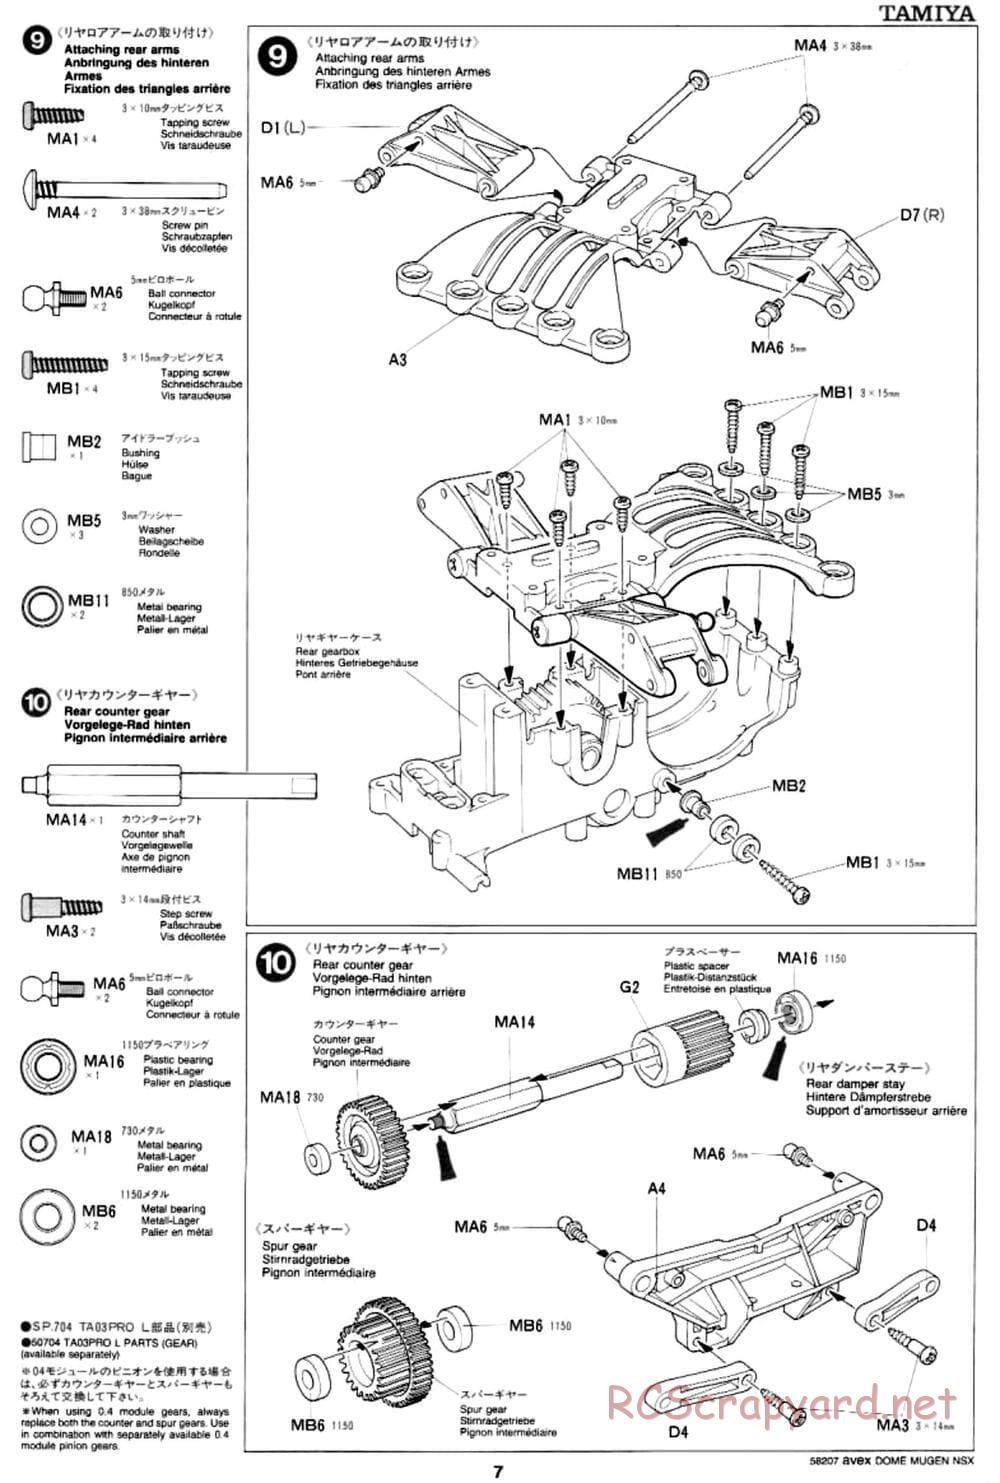 Tamiya - Avex Dome Mugen NSX - TA-03R Chassis - Manual - Page 7